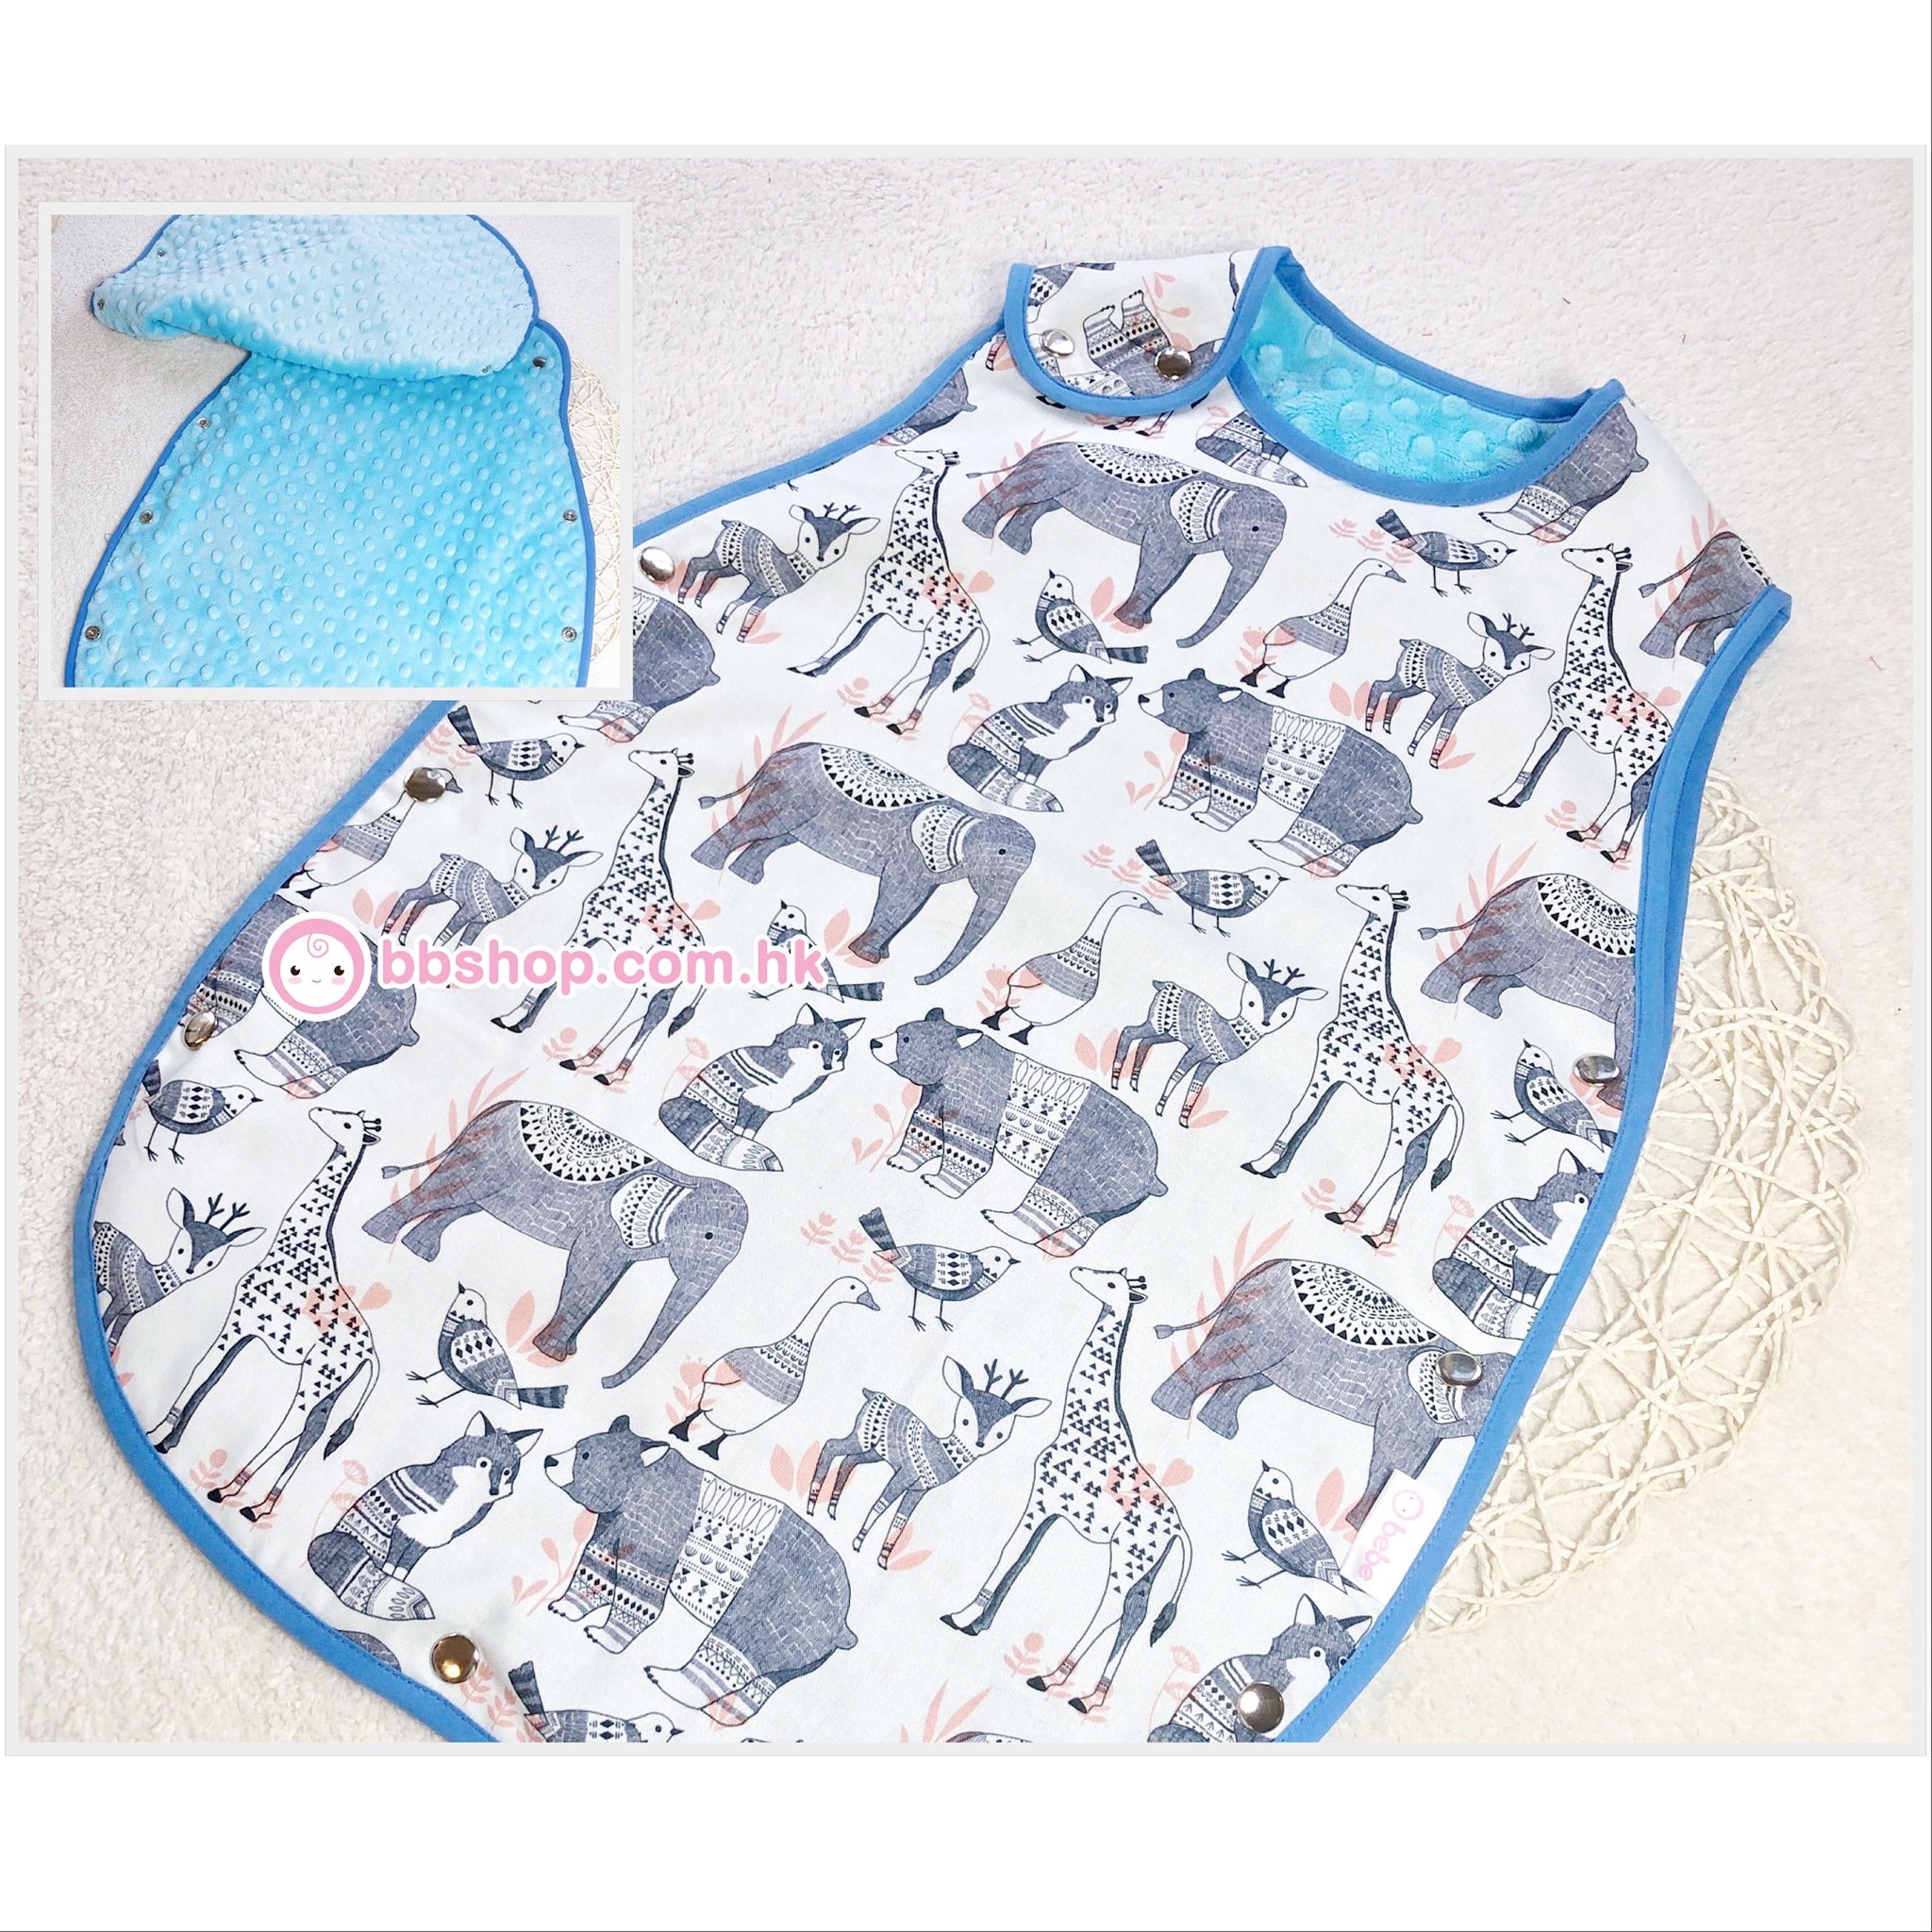 HMC108 嬰兒 / 兒童防踢被 Customized Fabric Personalized Baby Blanket